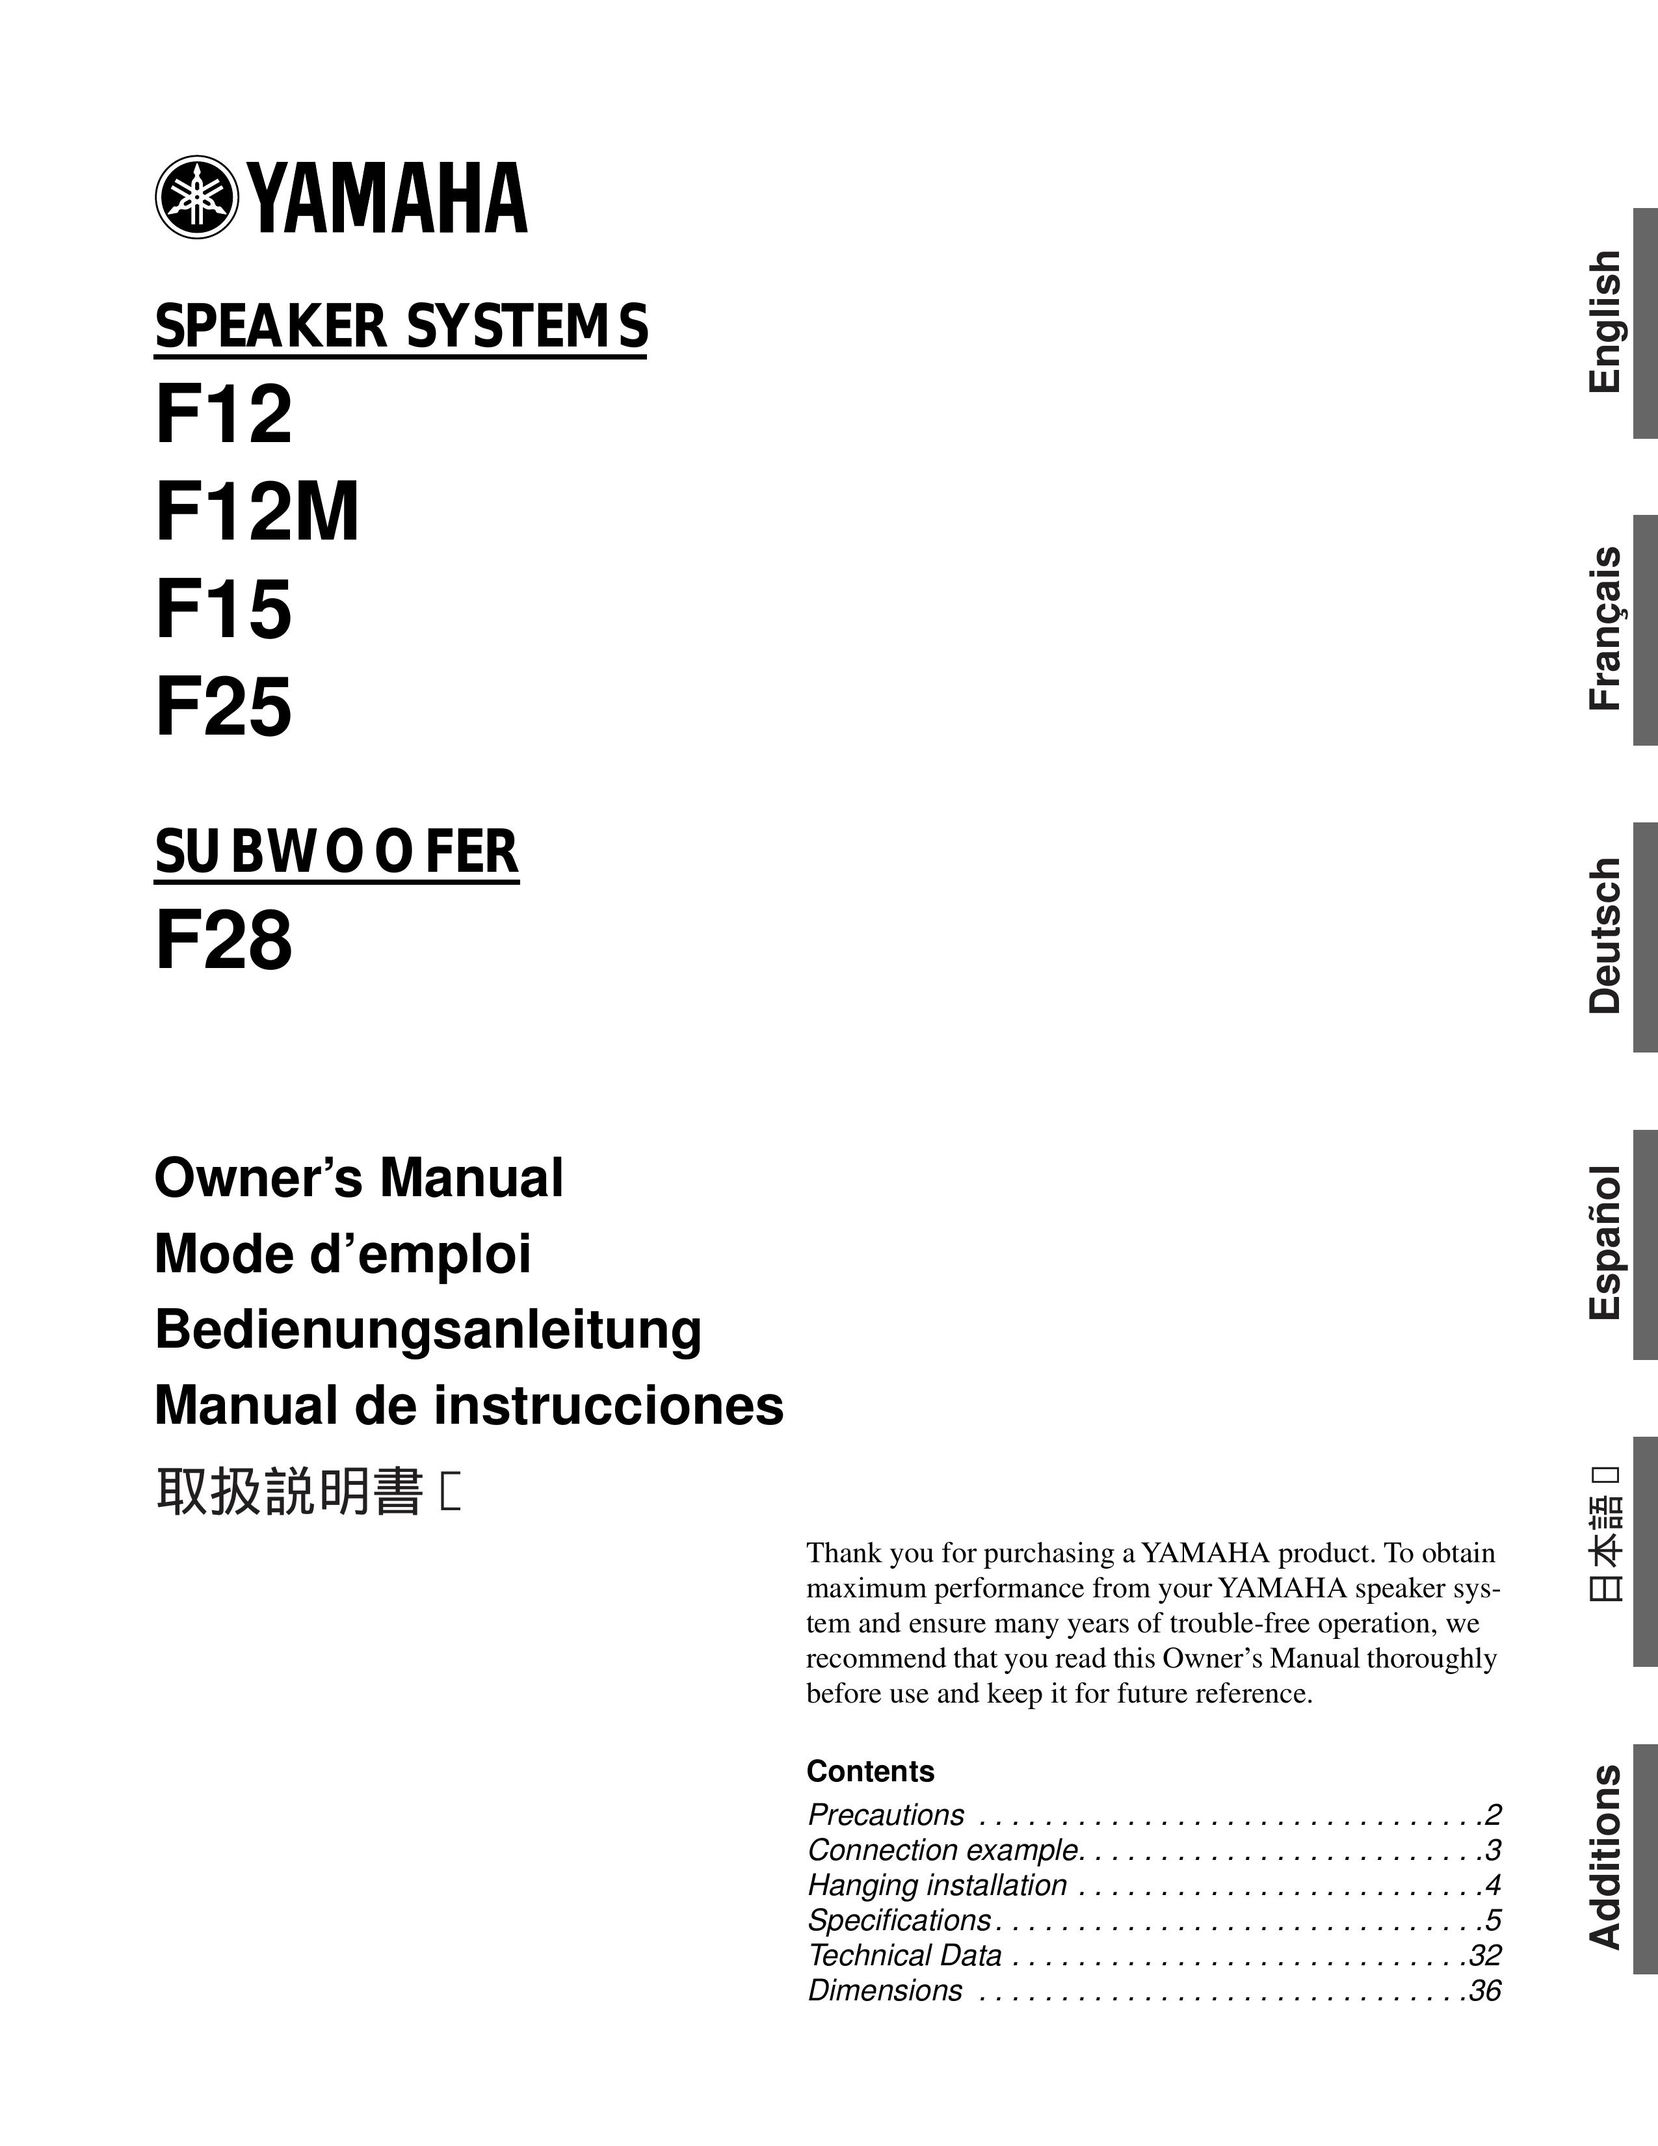 Yamaha F15 Speaker User Manual